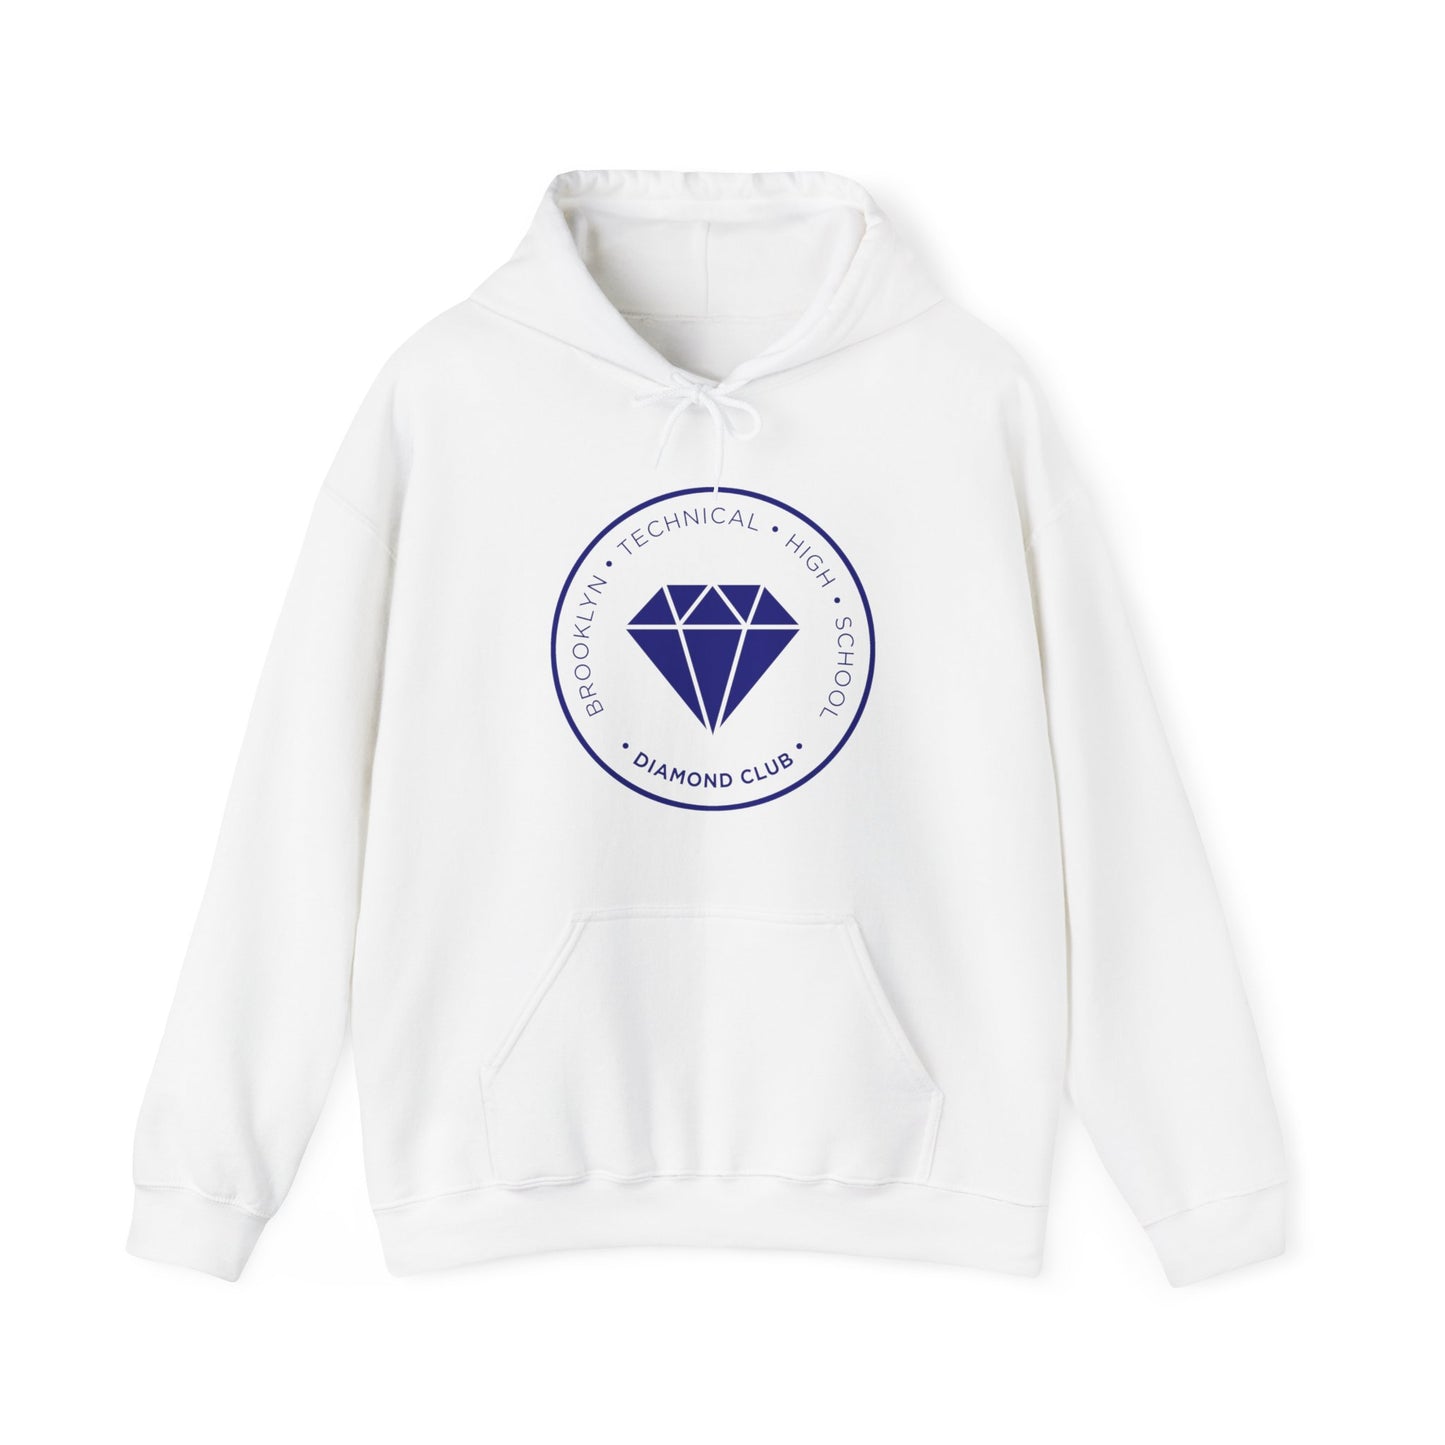 Diamond Club - Men's Heavy Blend Hooded Sweatshirt